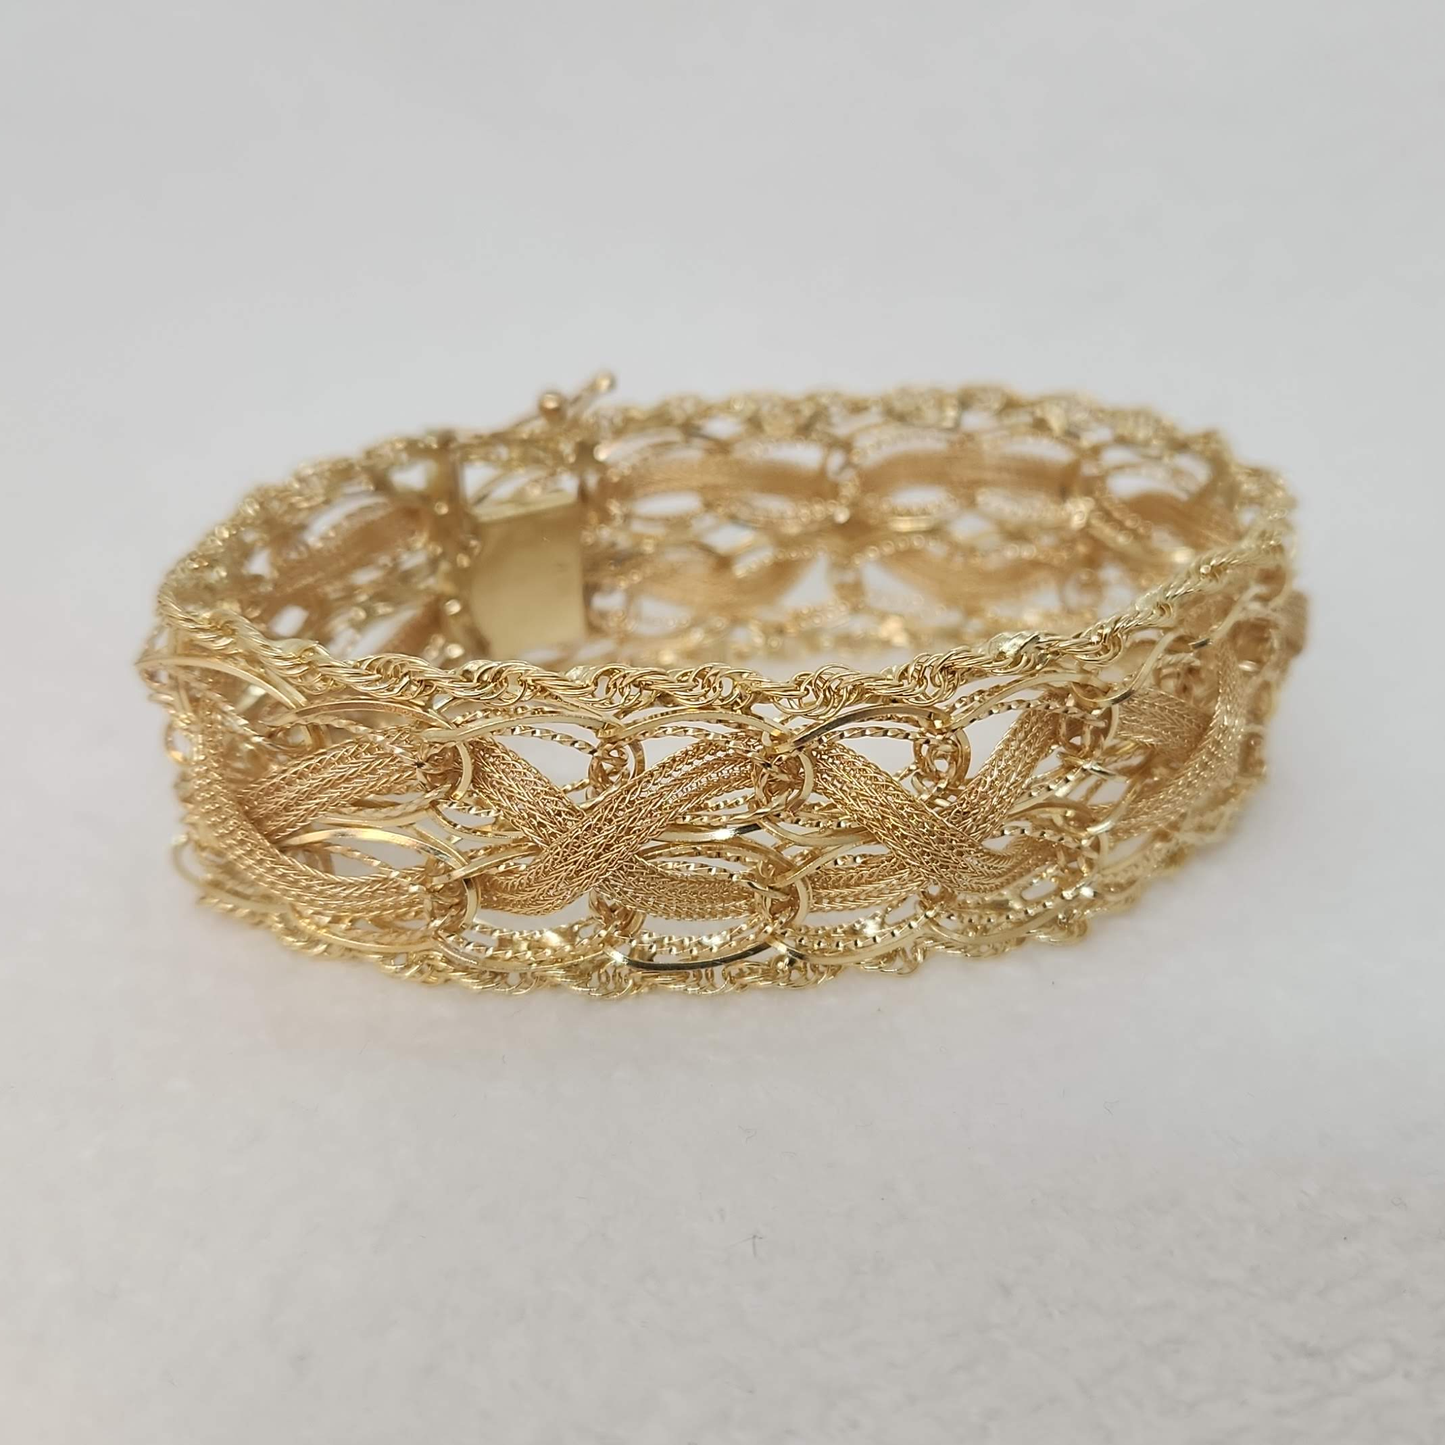 Woven Mid-Century Bracelet